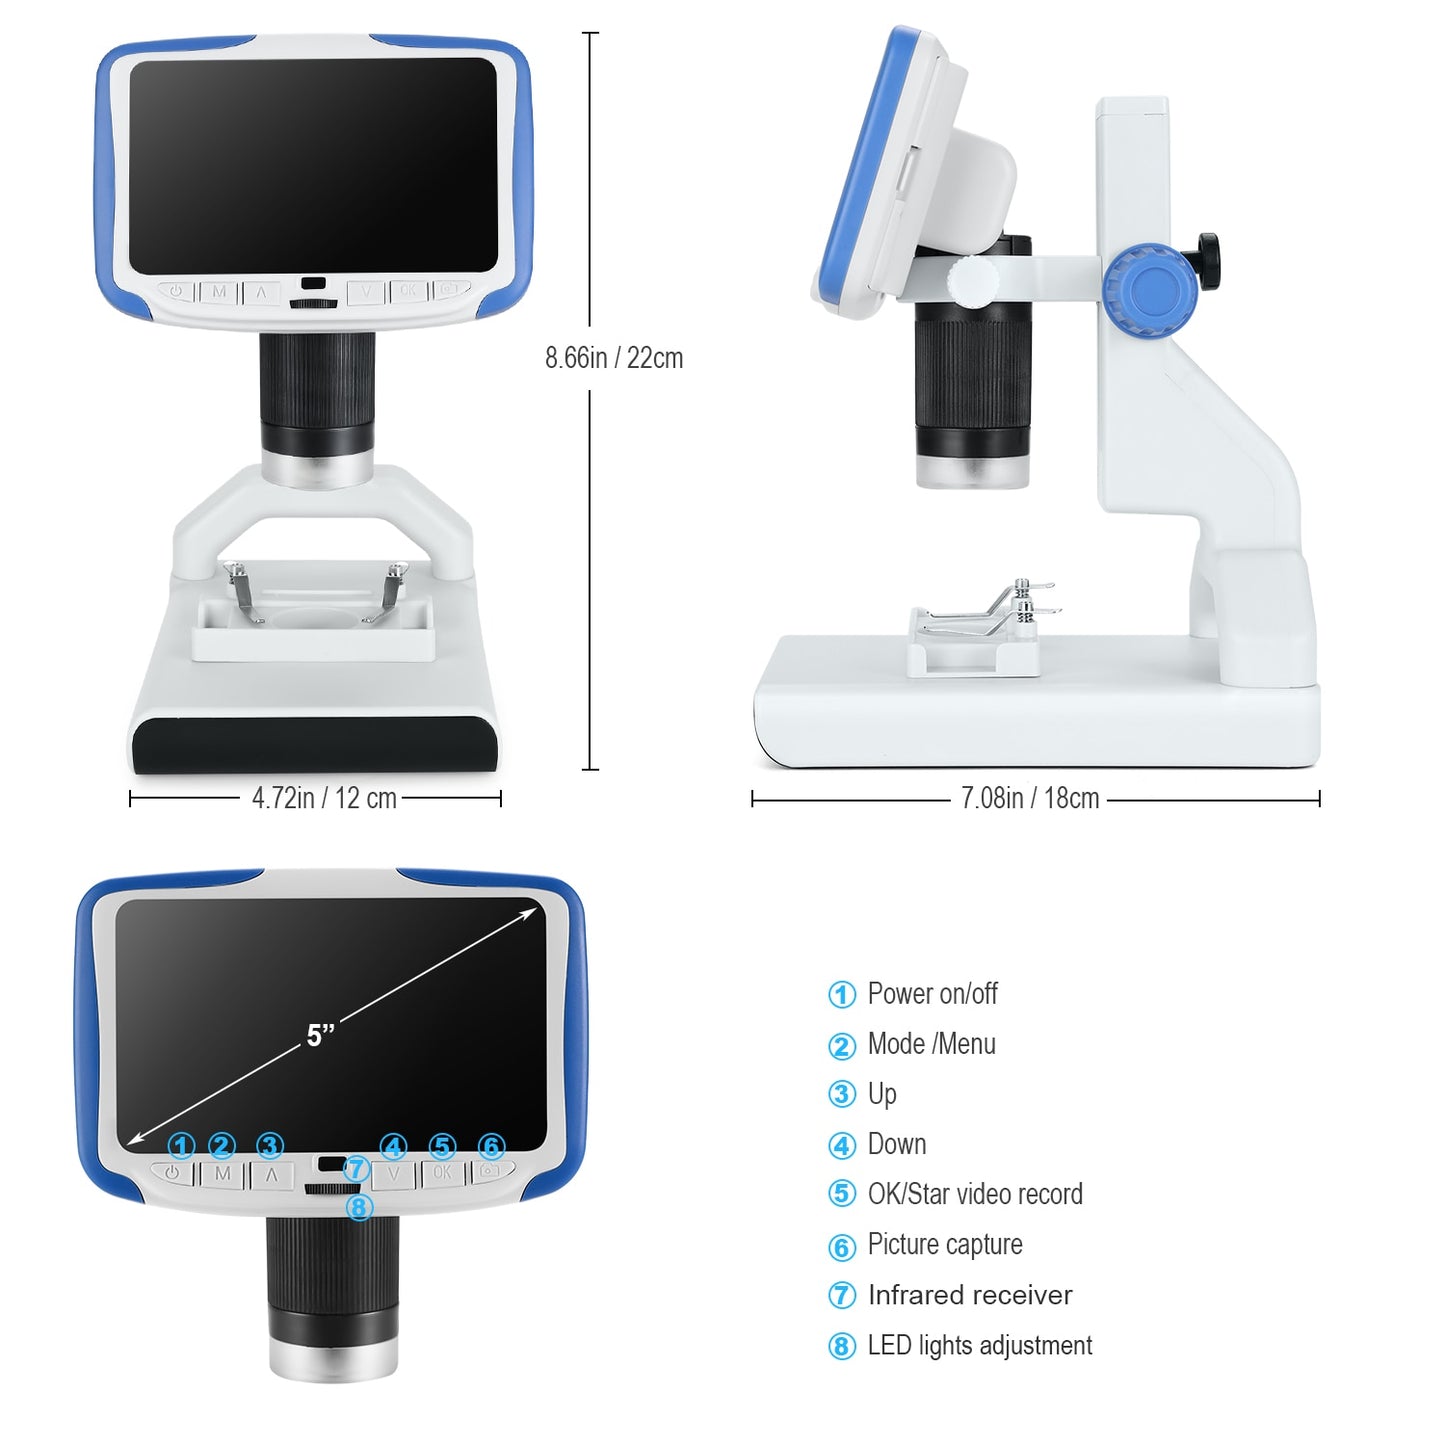 Andonstar AD205 Digital Desktop Mini Microscope with 5 Inch LCD Screen Student Educational Biologic for Kids Children Gift